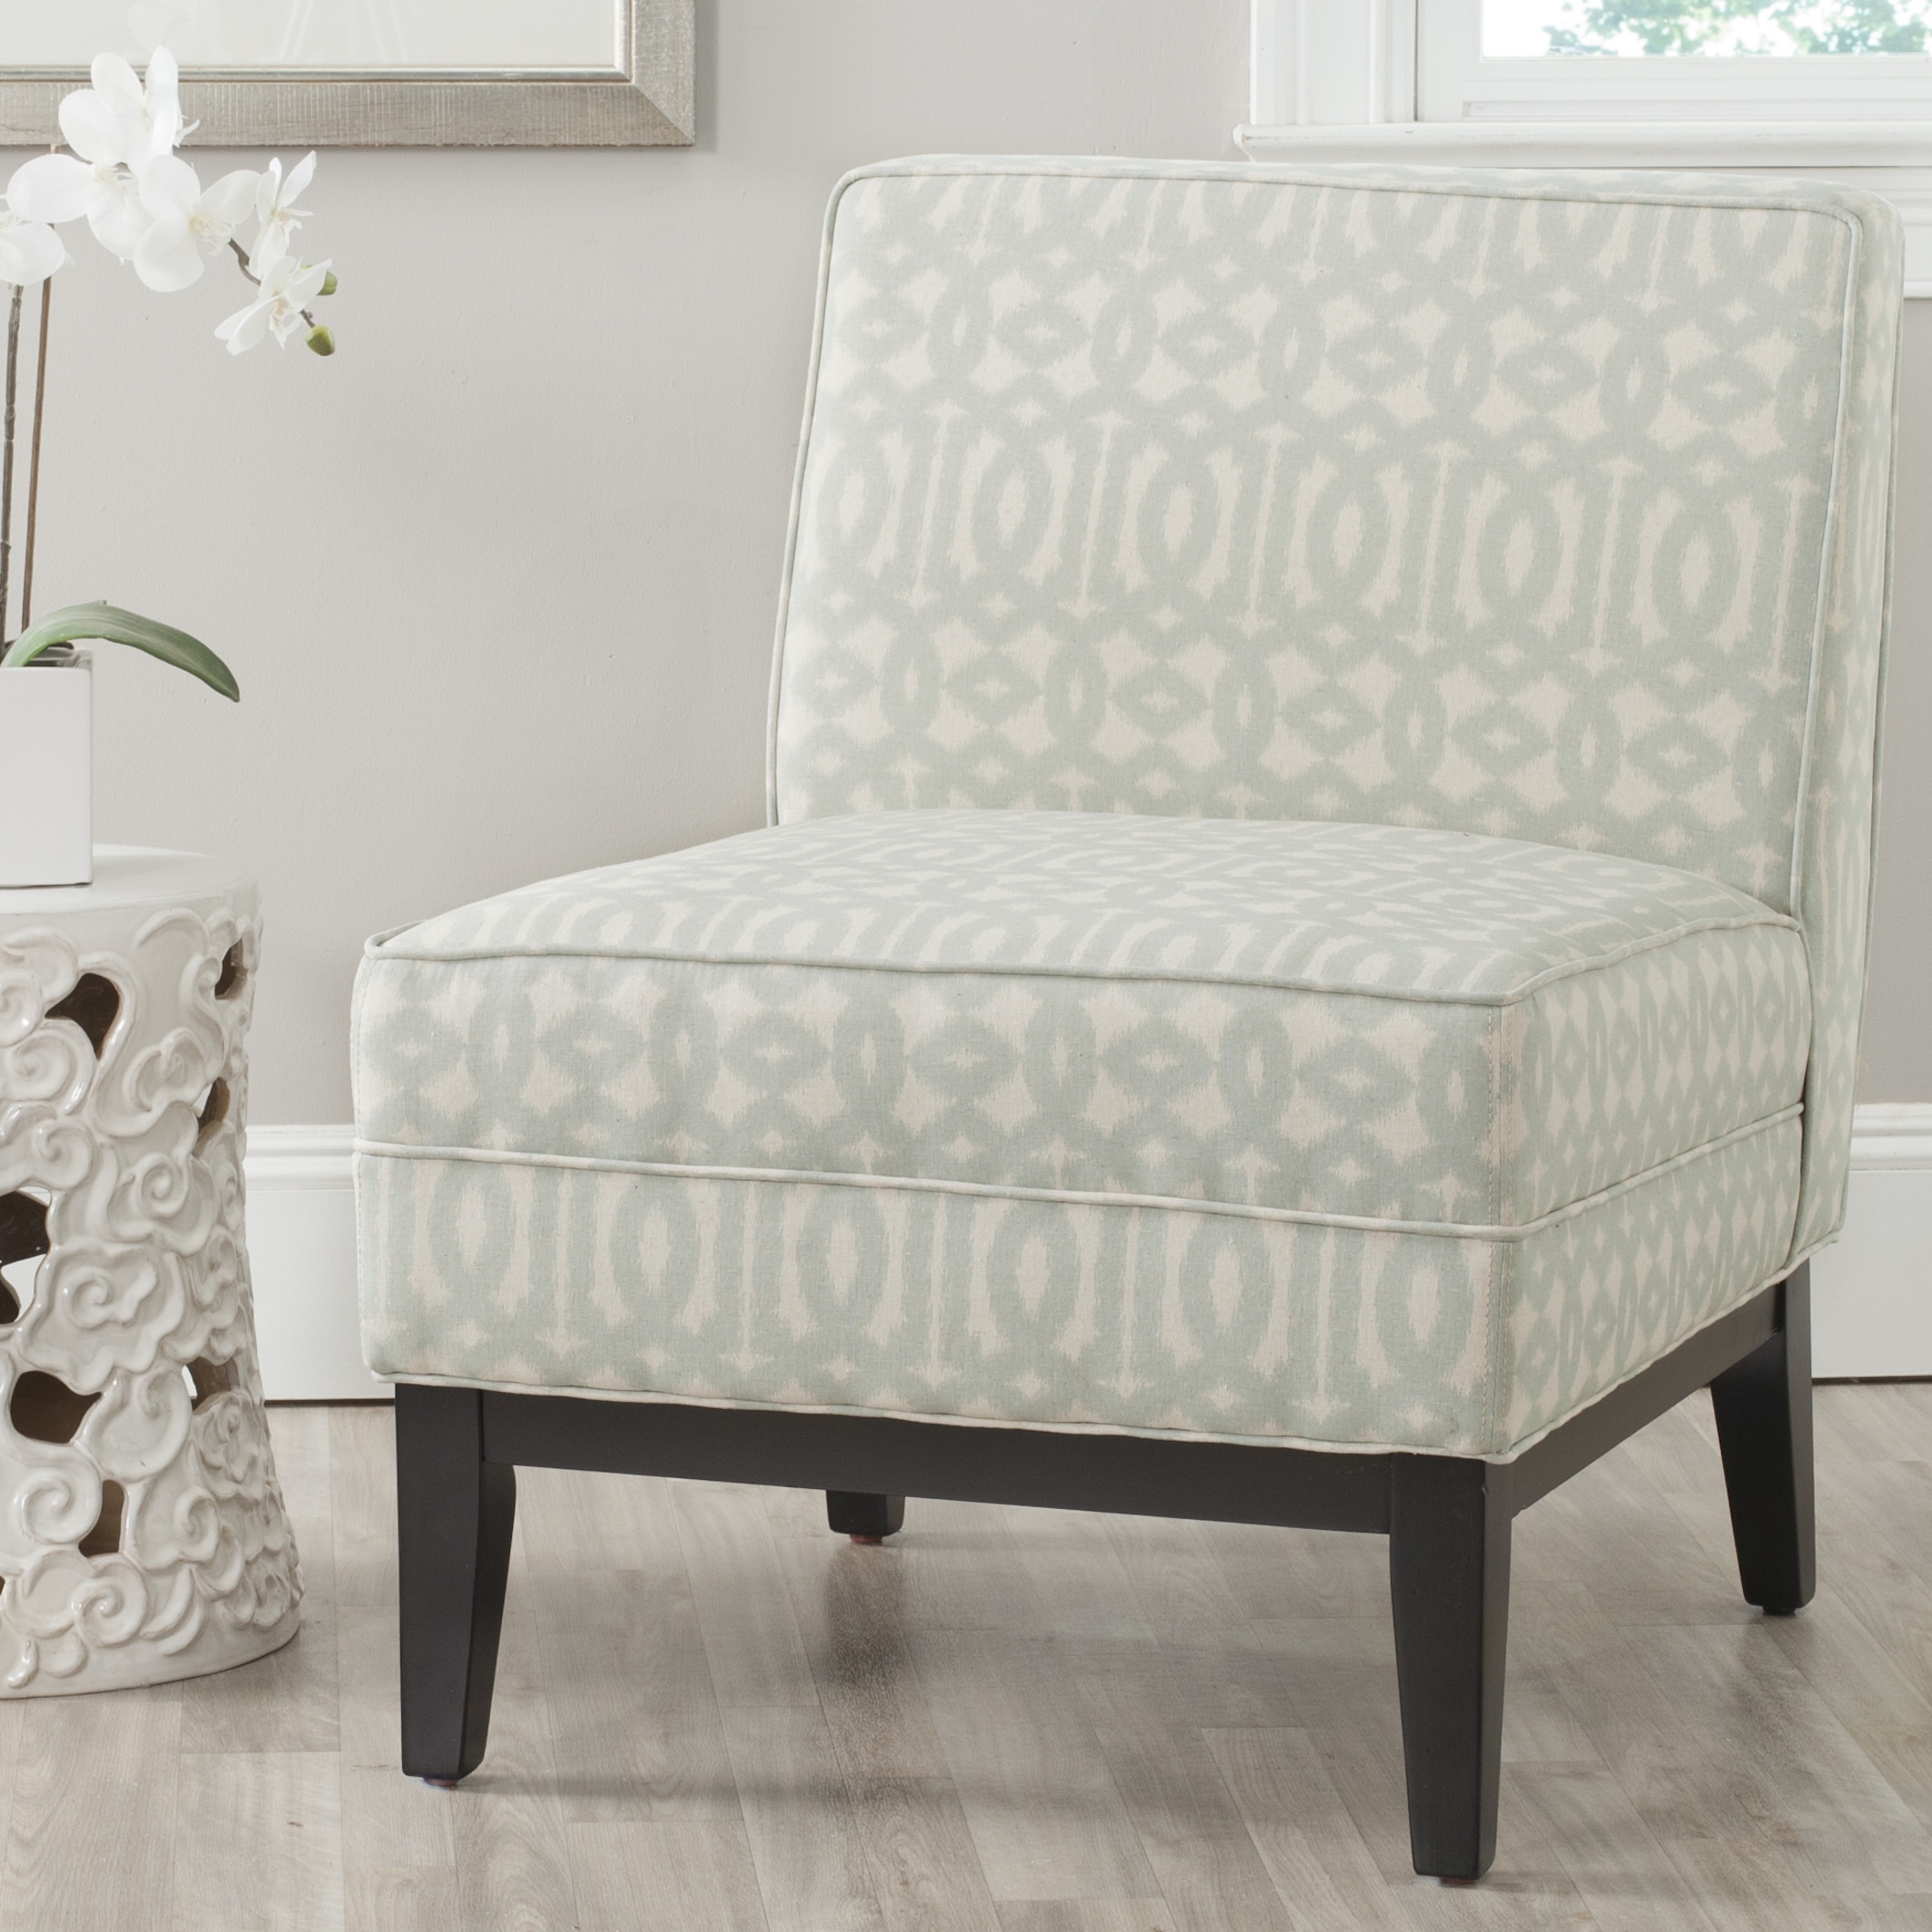 Armond Chair - Seafoam/Cream - Arlo Home - Image 5